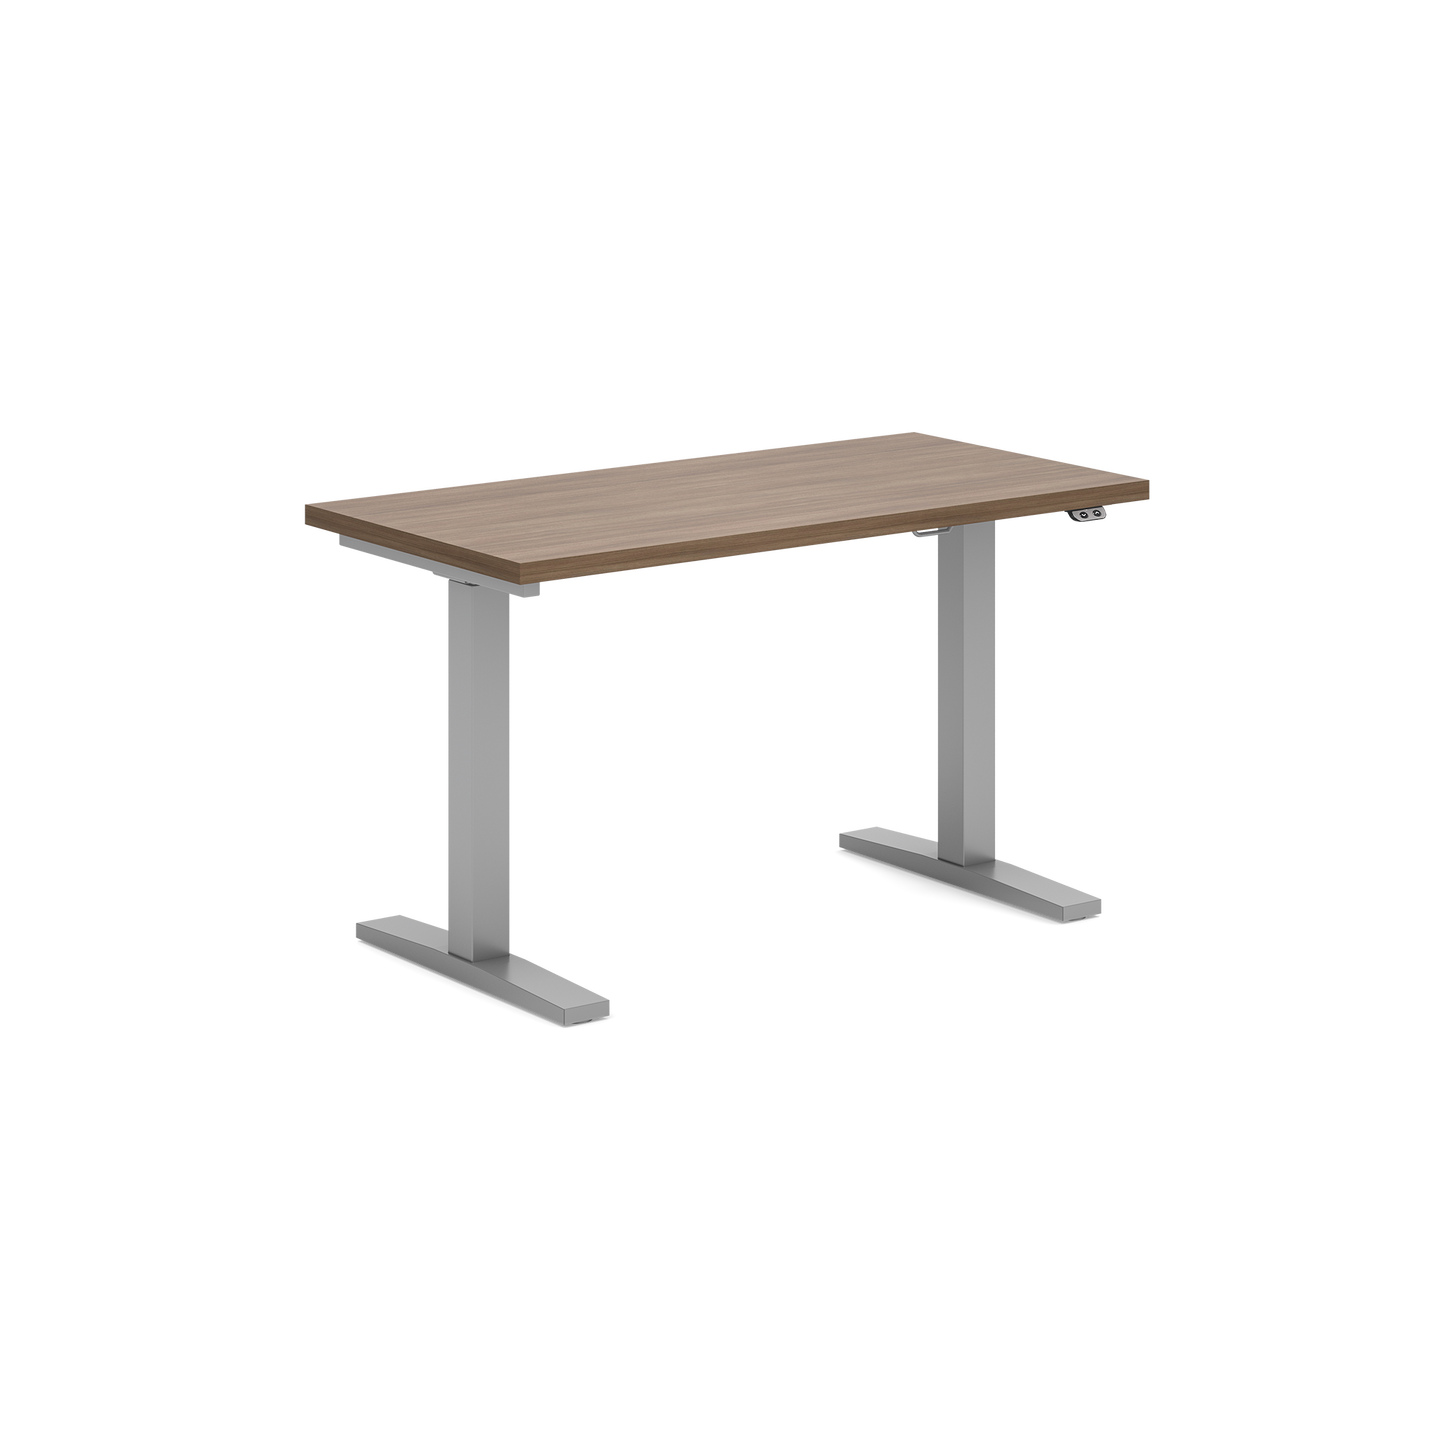 Altitude Basic Height Adjustable Table